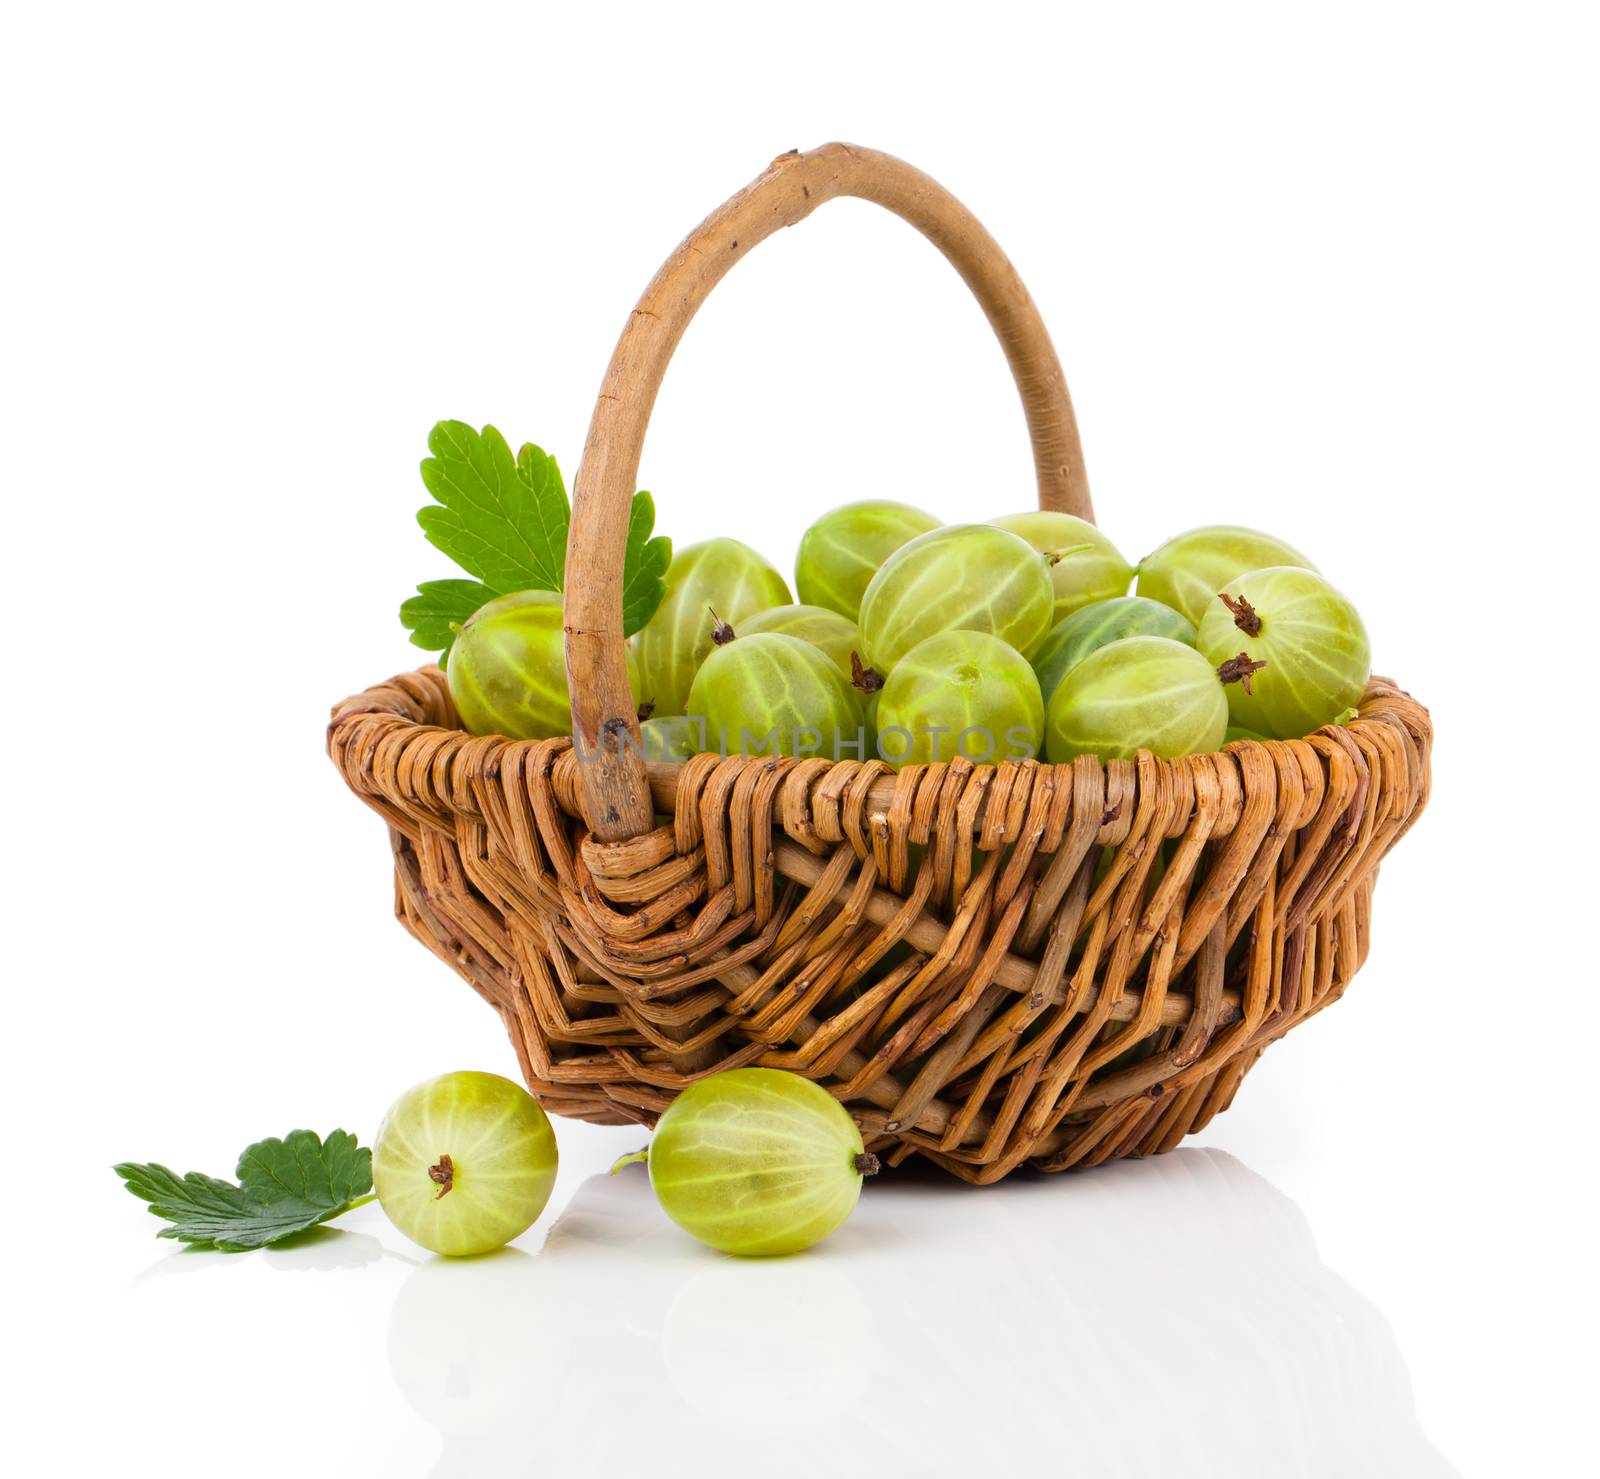 fresh gooseberry in a wicker basket, on a white background by motorolka